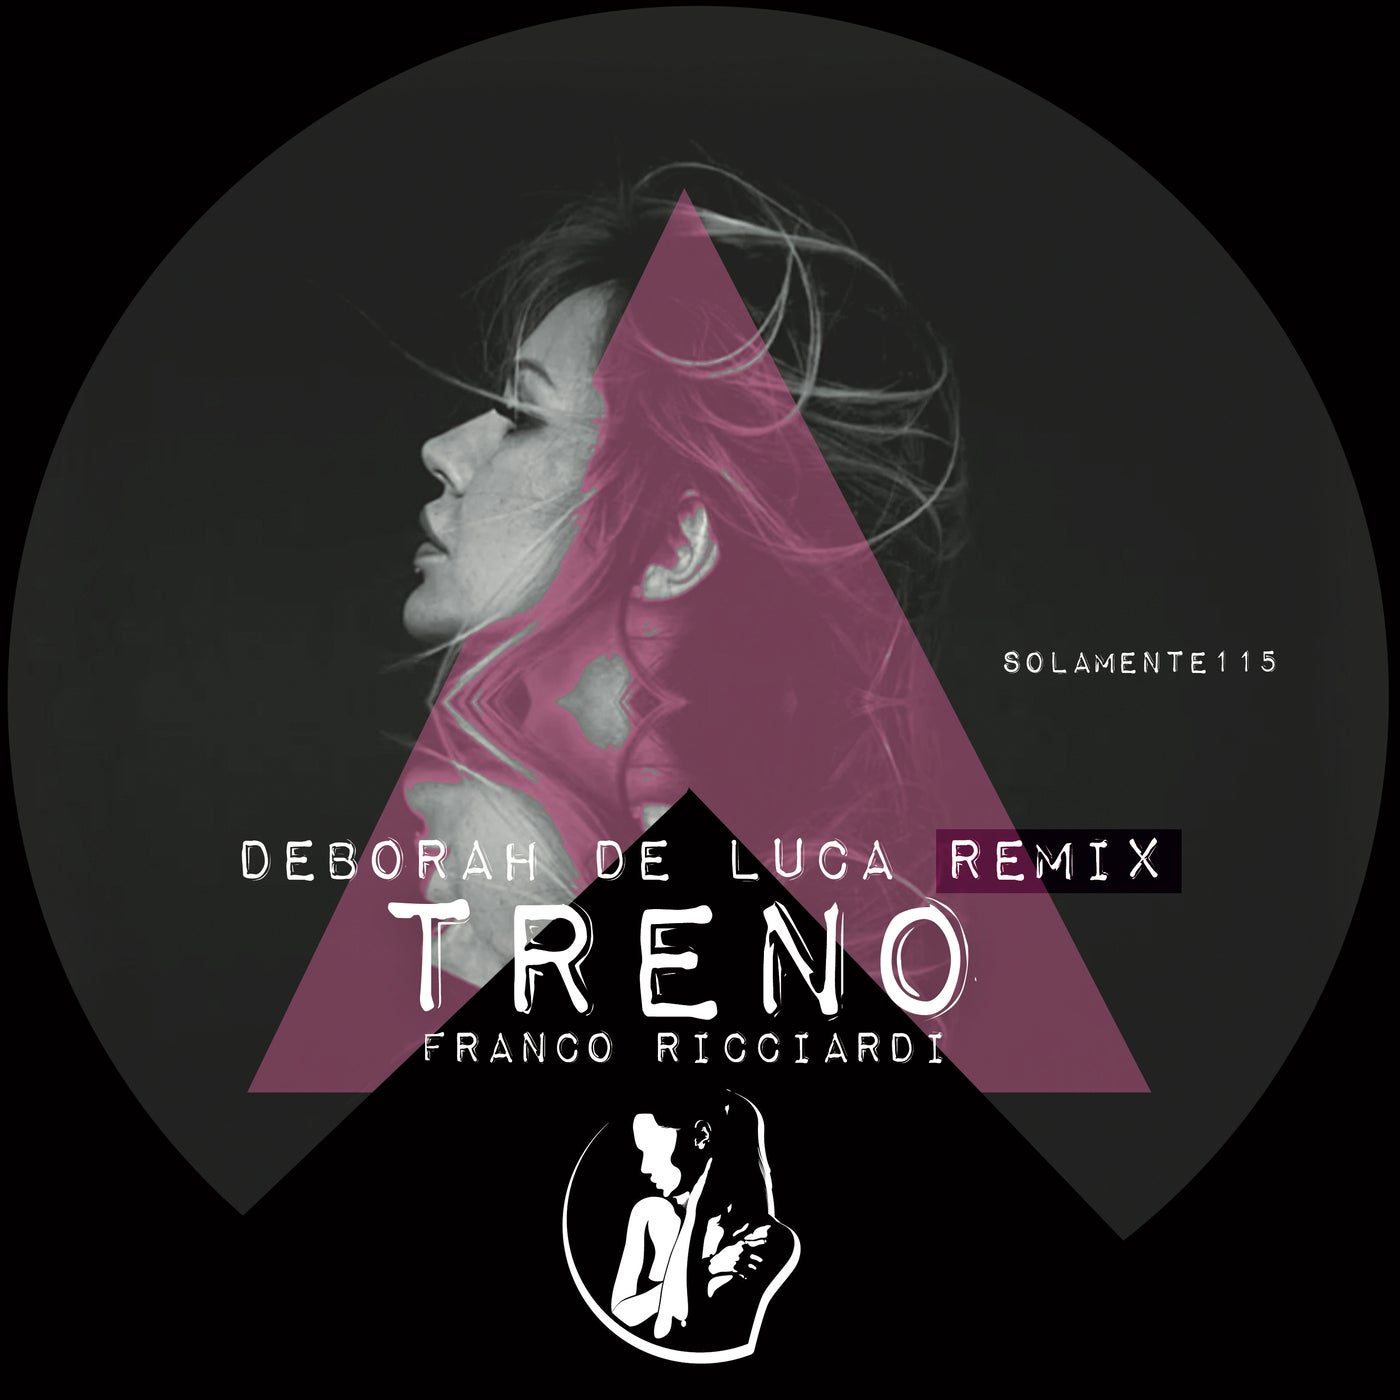 image cover: Franco Ricciardi - Treno (Deborah De Luca Remix) / SOLAMENTE115